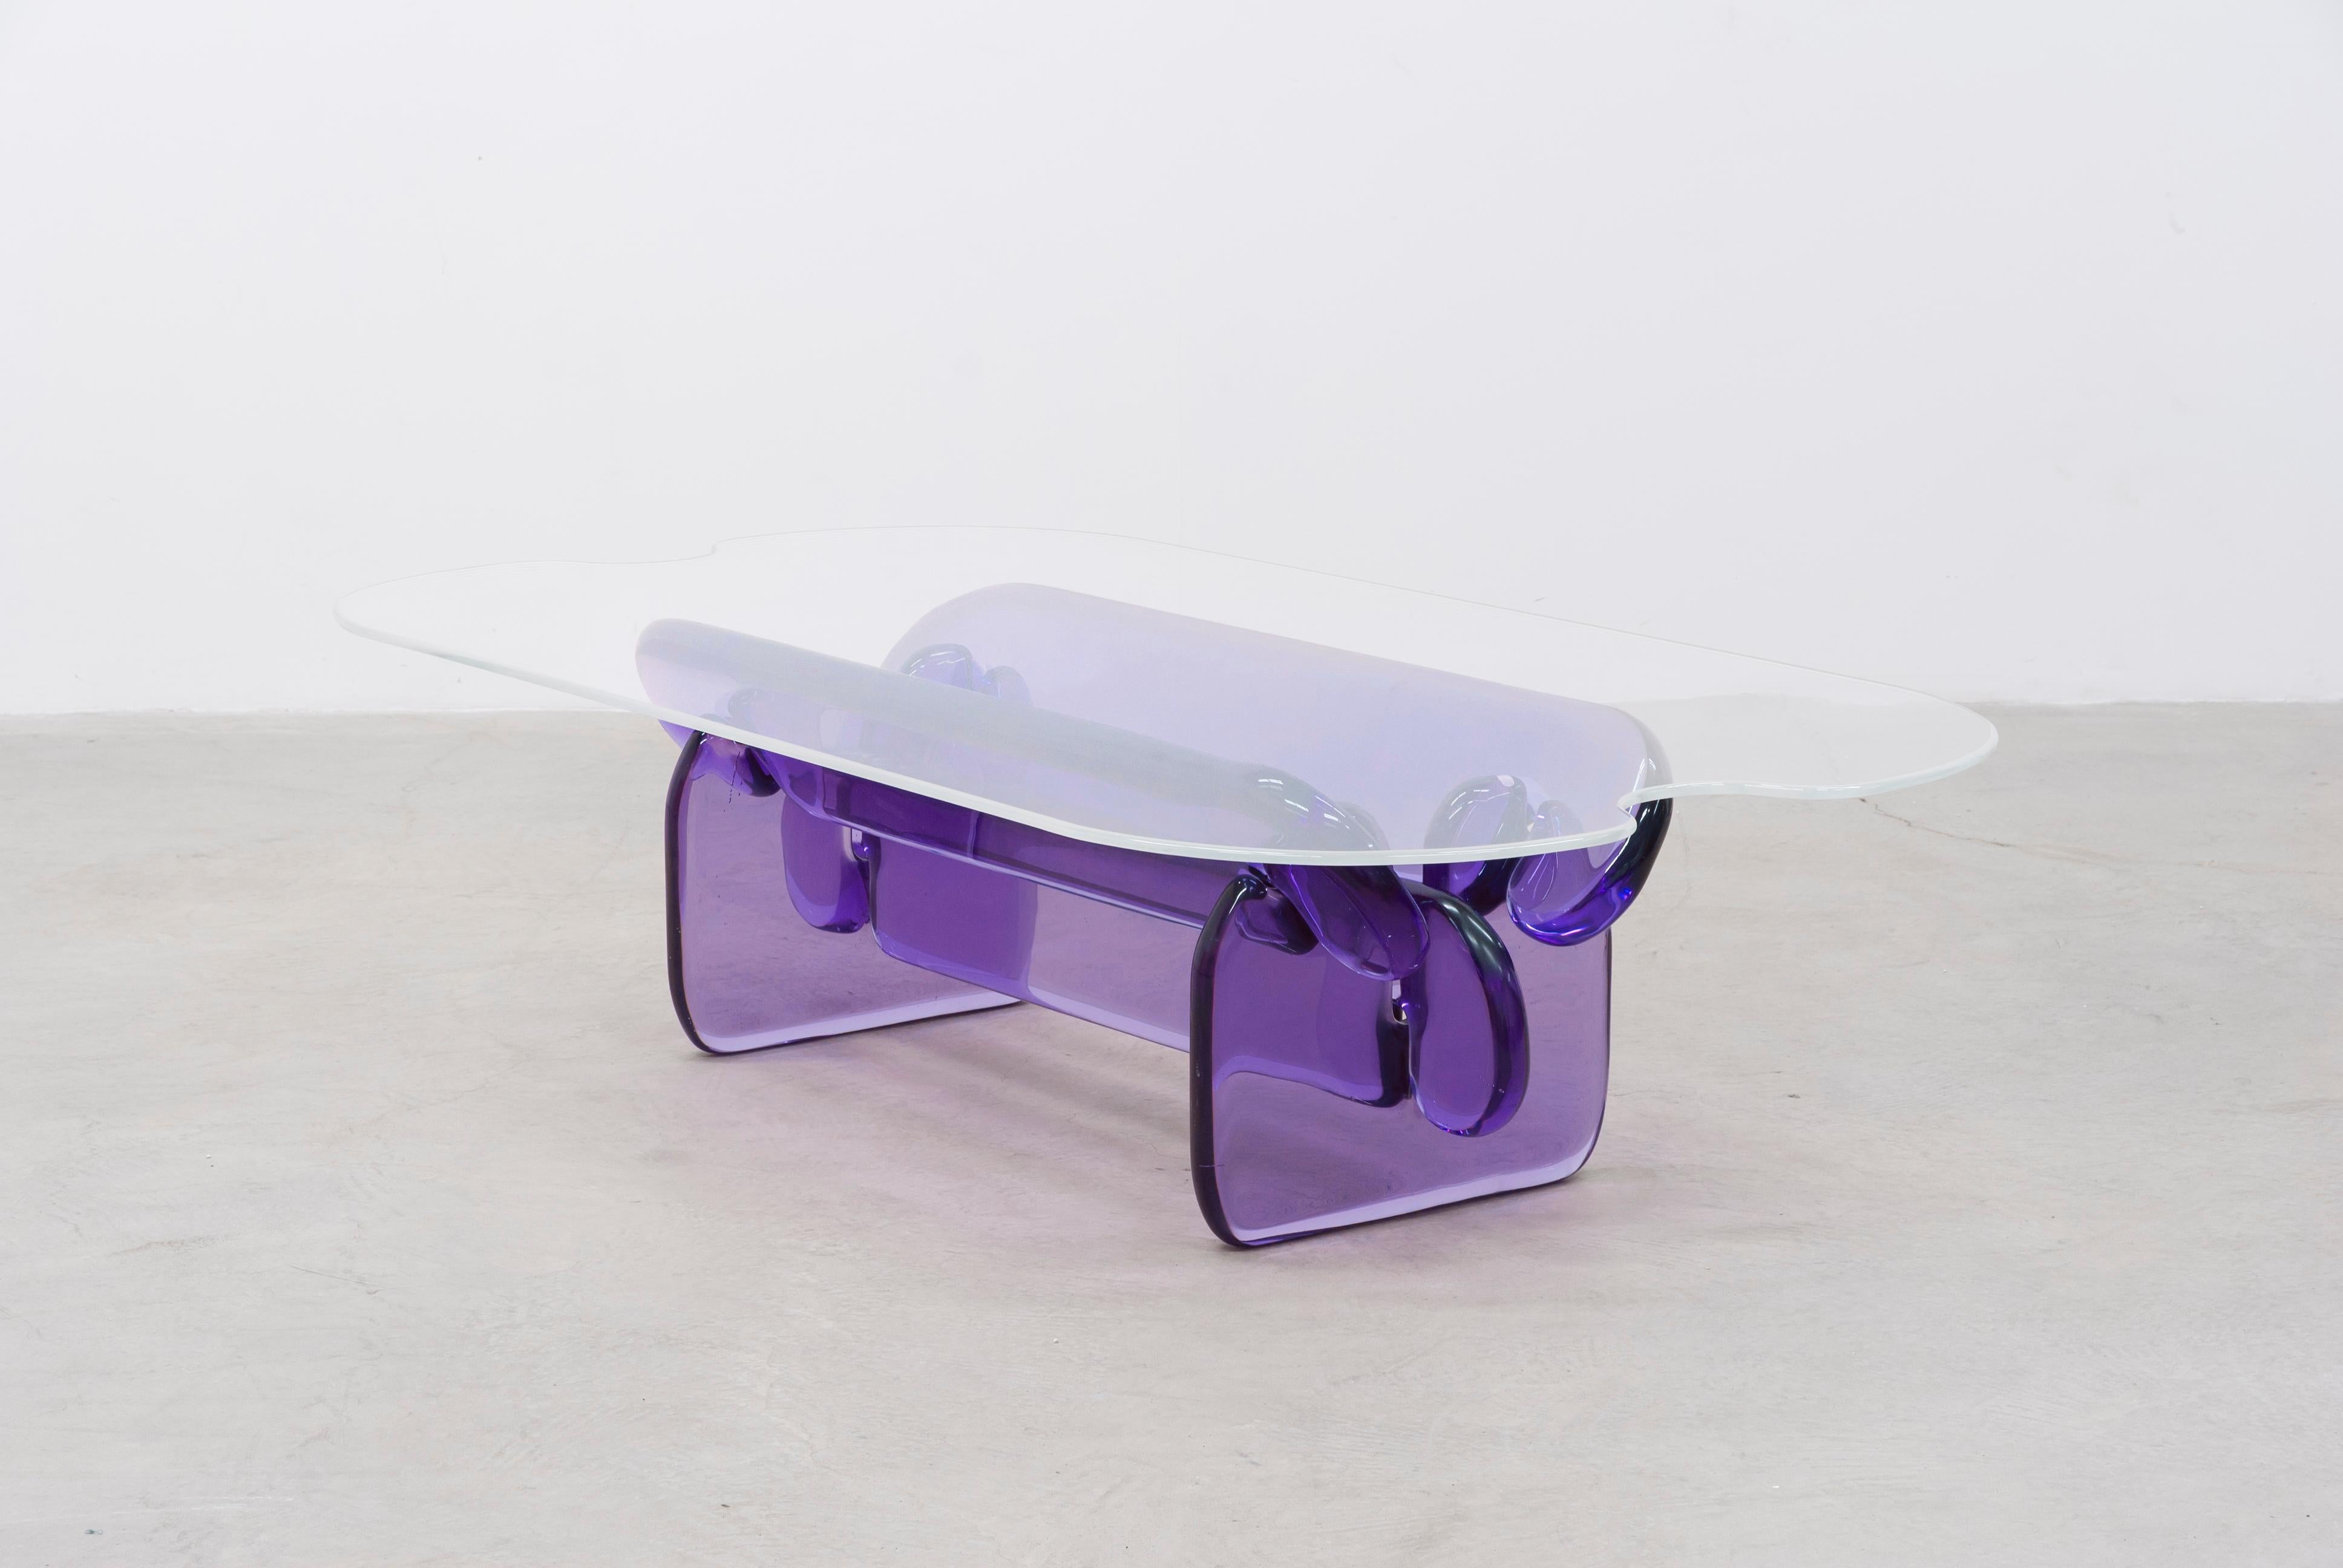 Acrylic Plump resin table in Hard Candy Purple by Ian Alistair Cochran